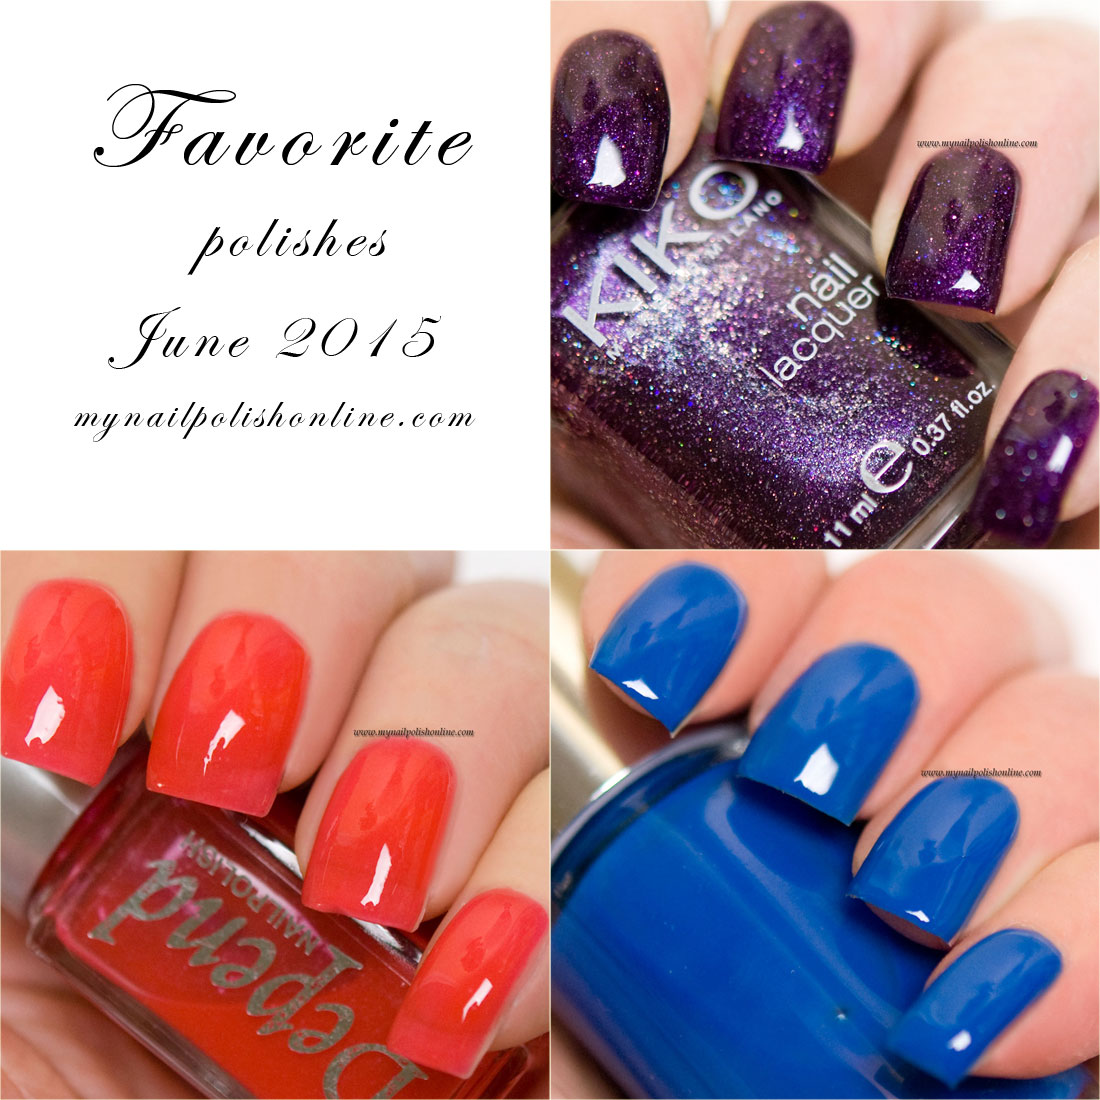 Favorite polishes - June 2015